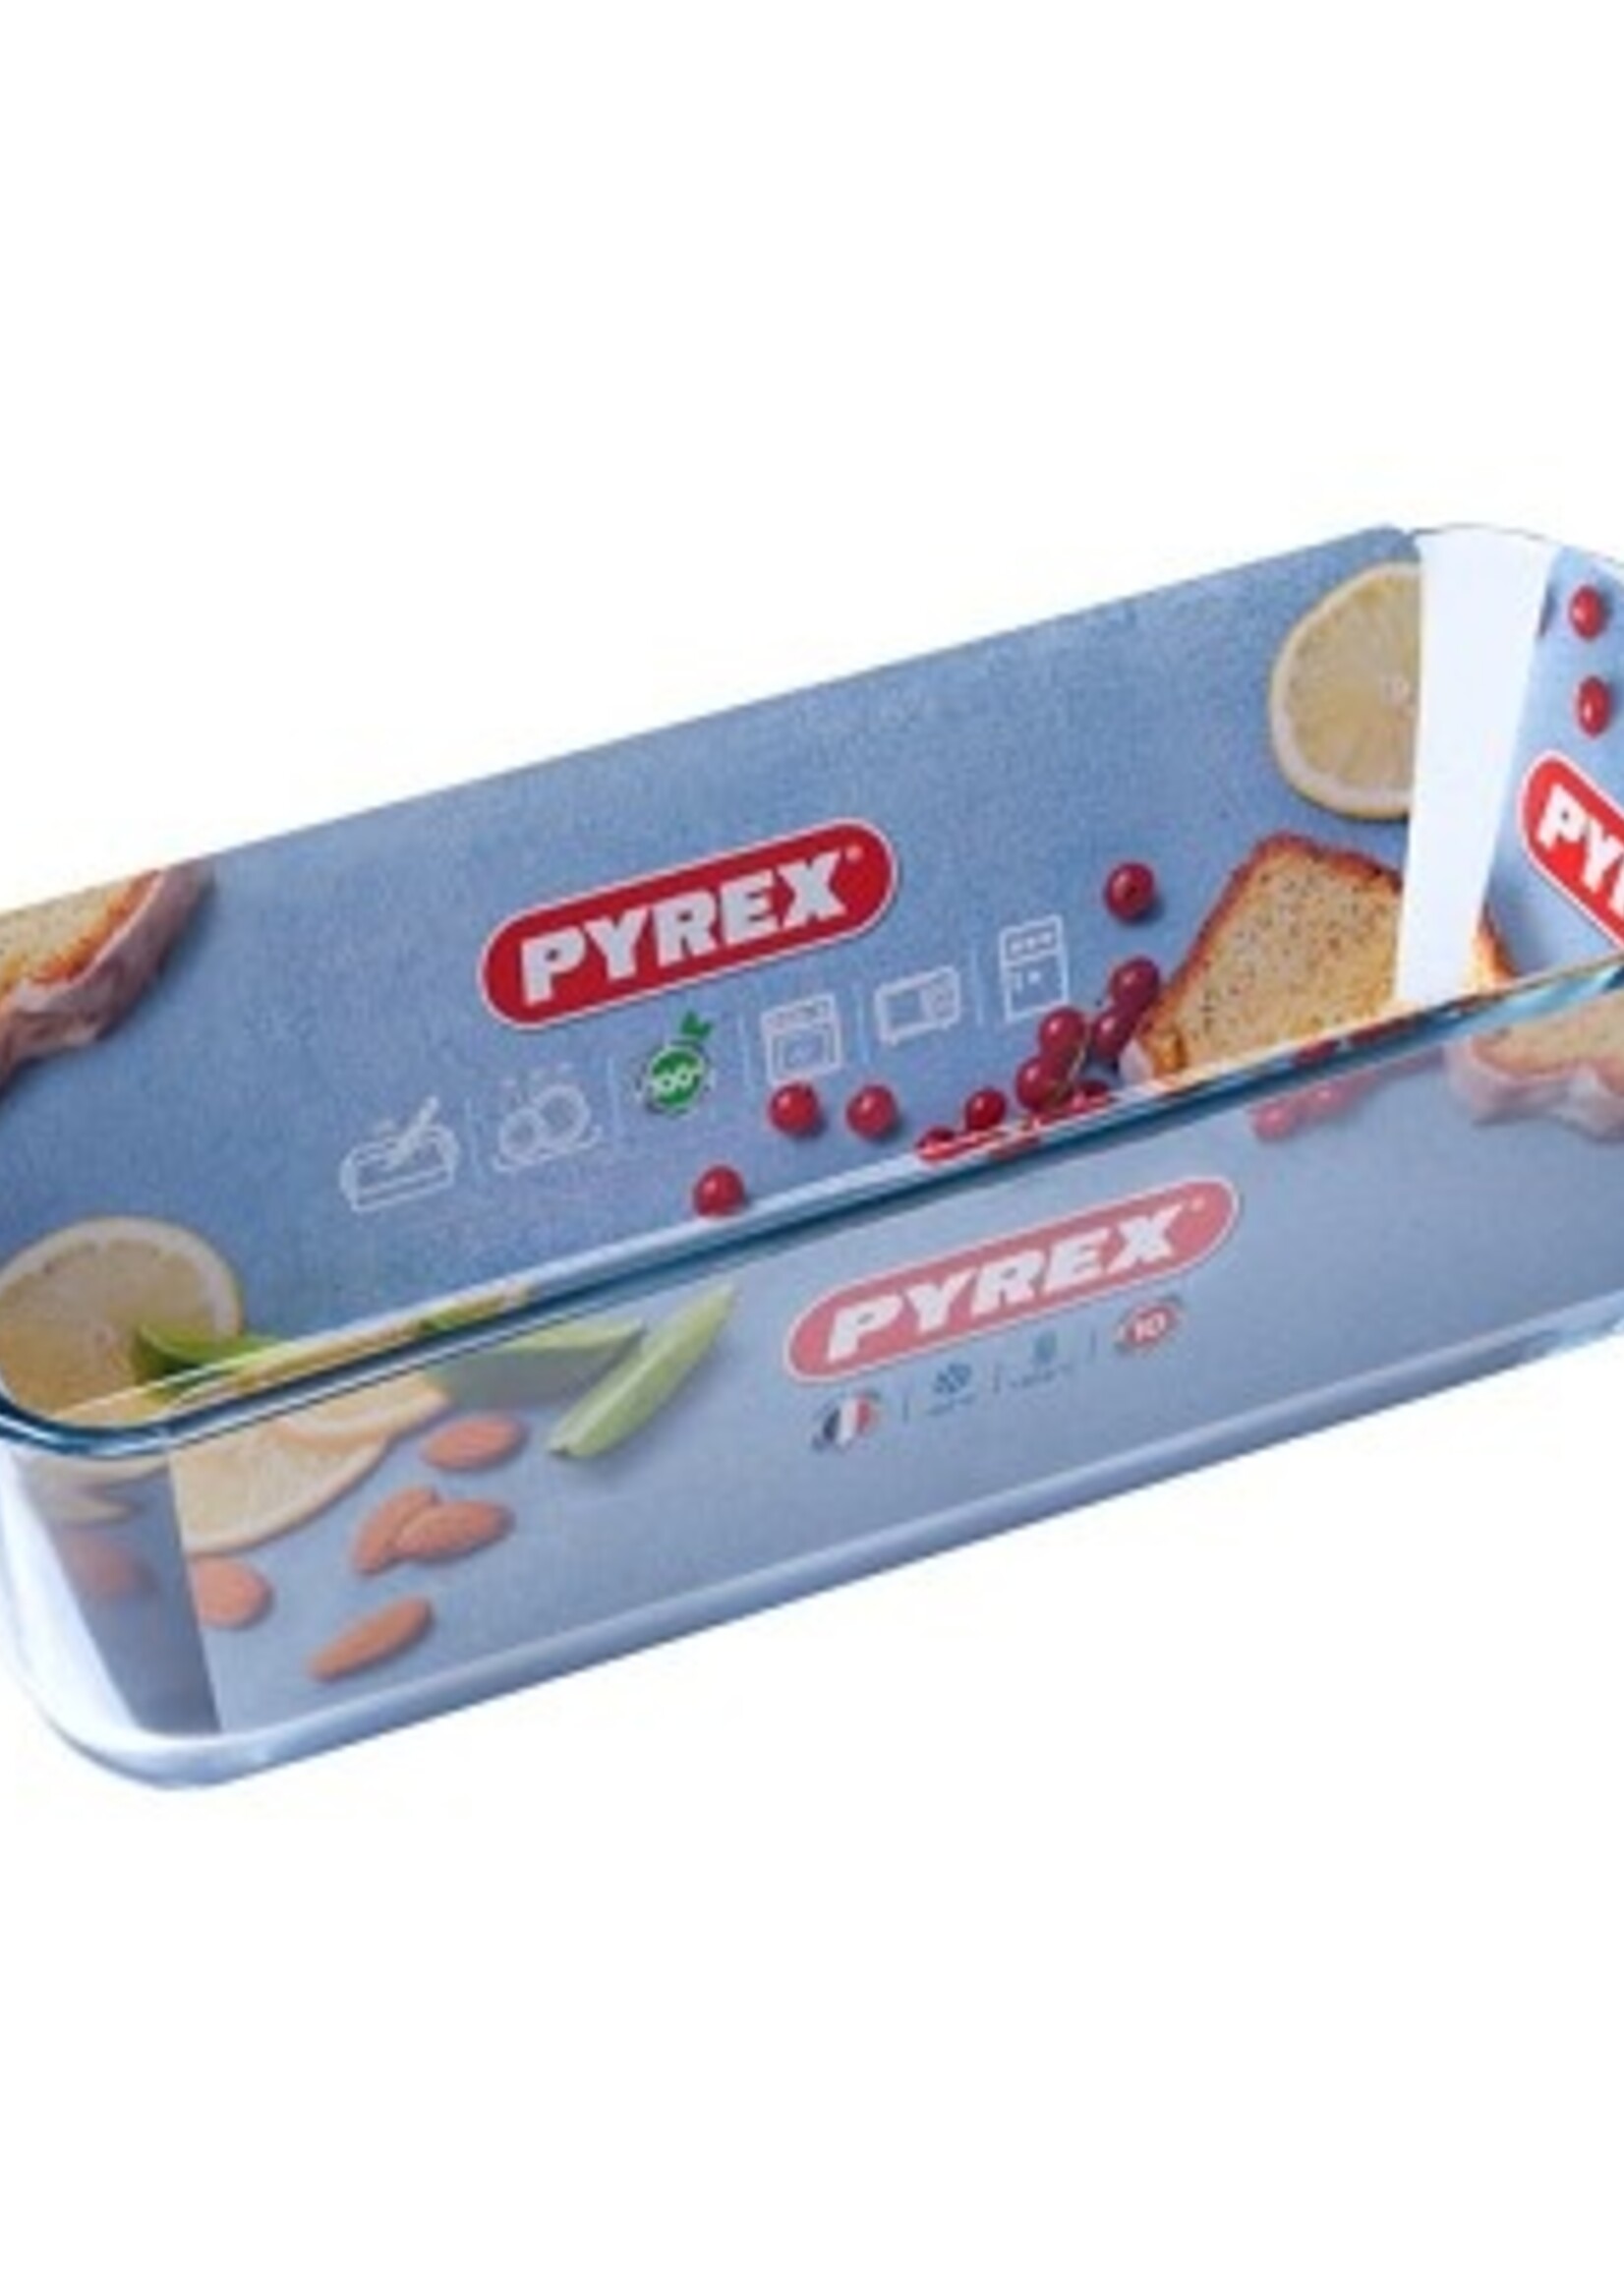 Pyrex cake vorm glas 30x11cm